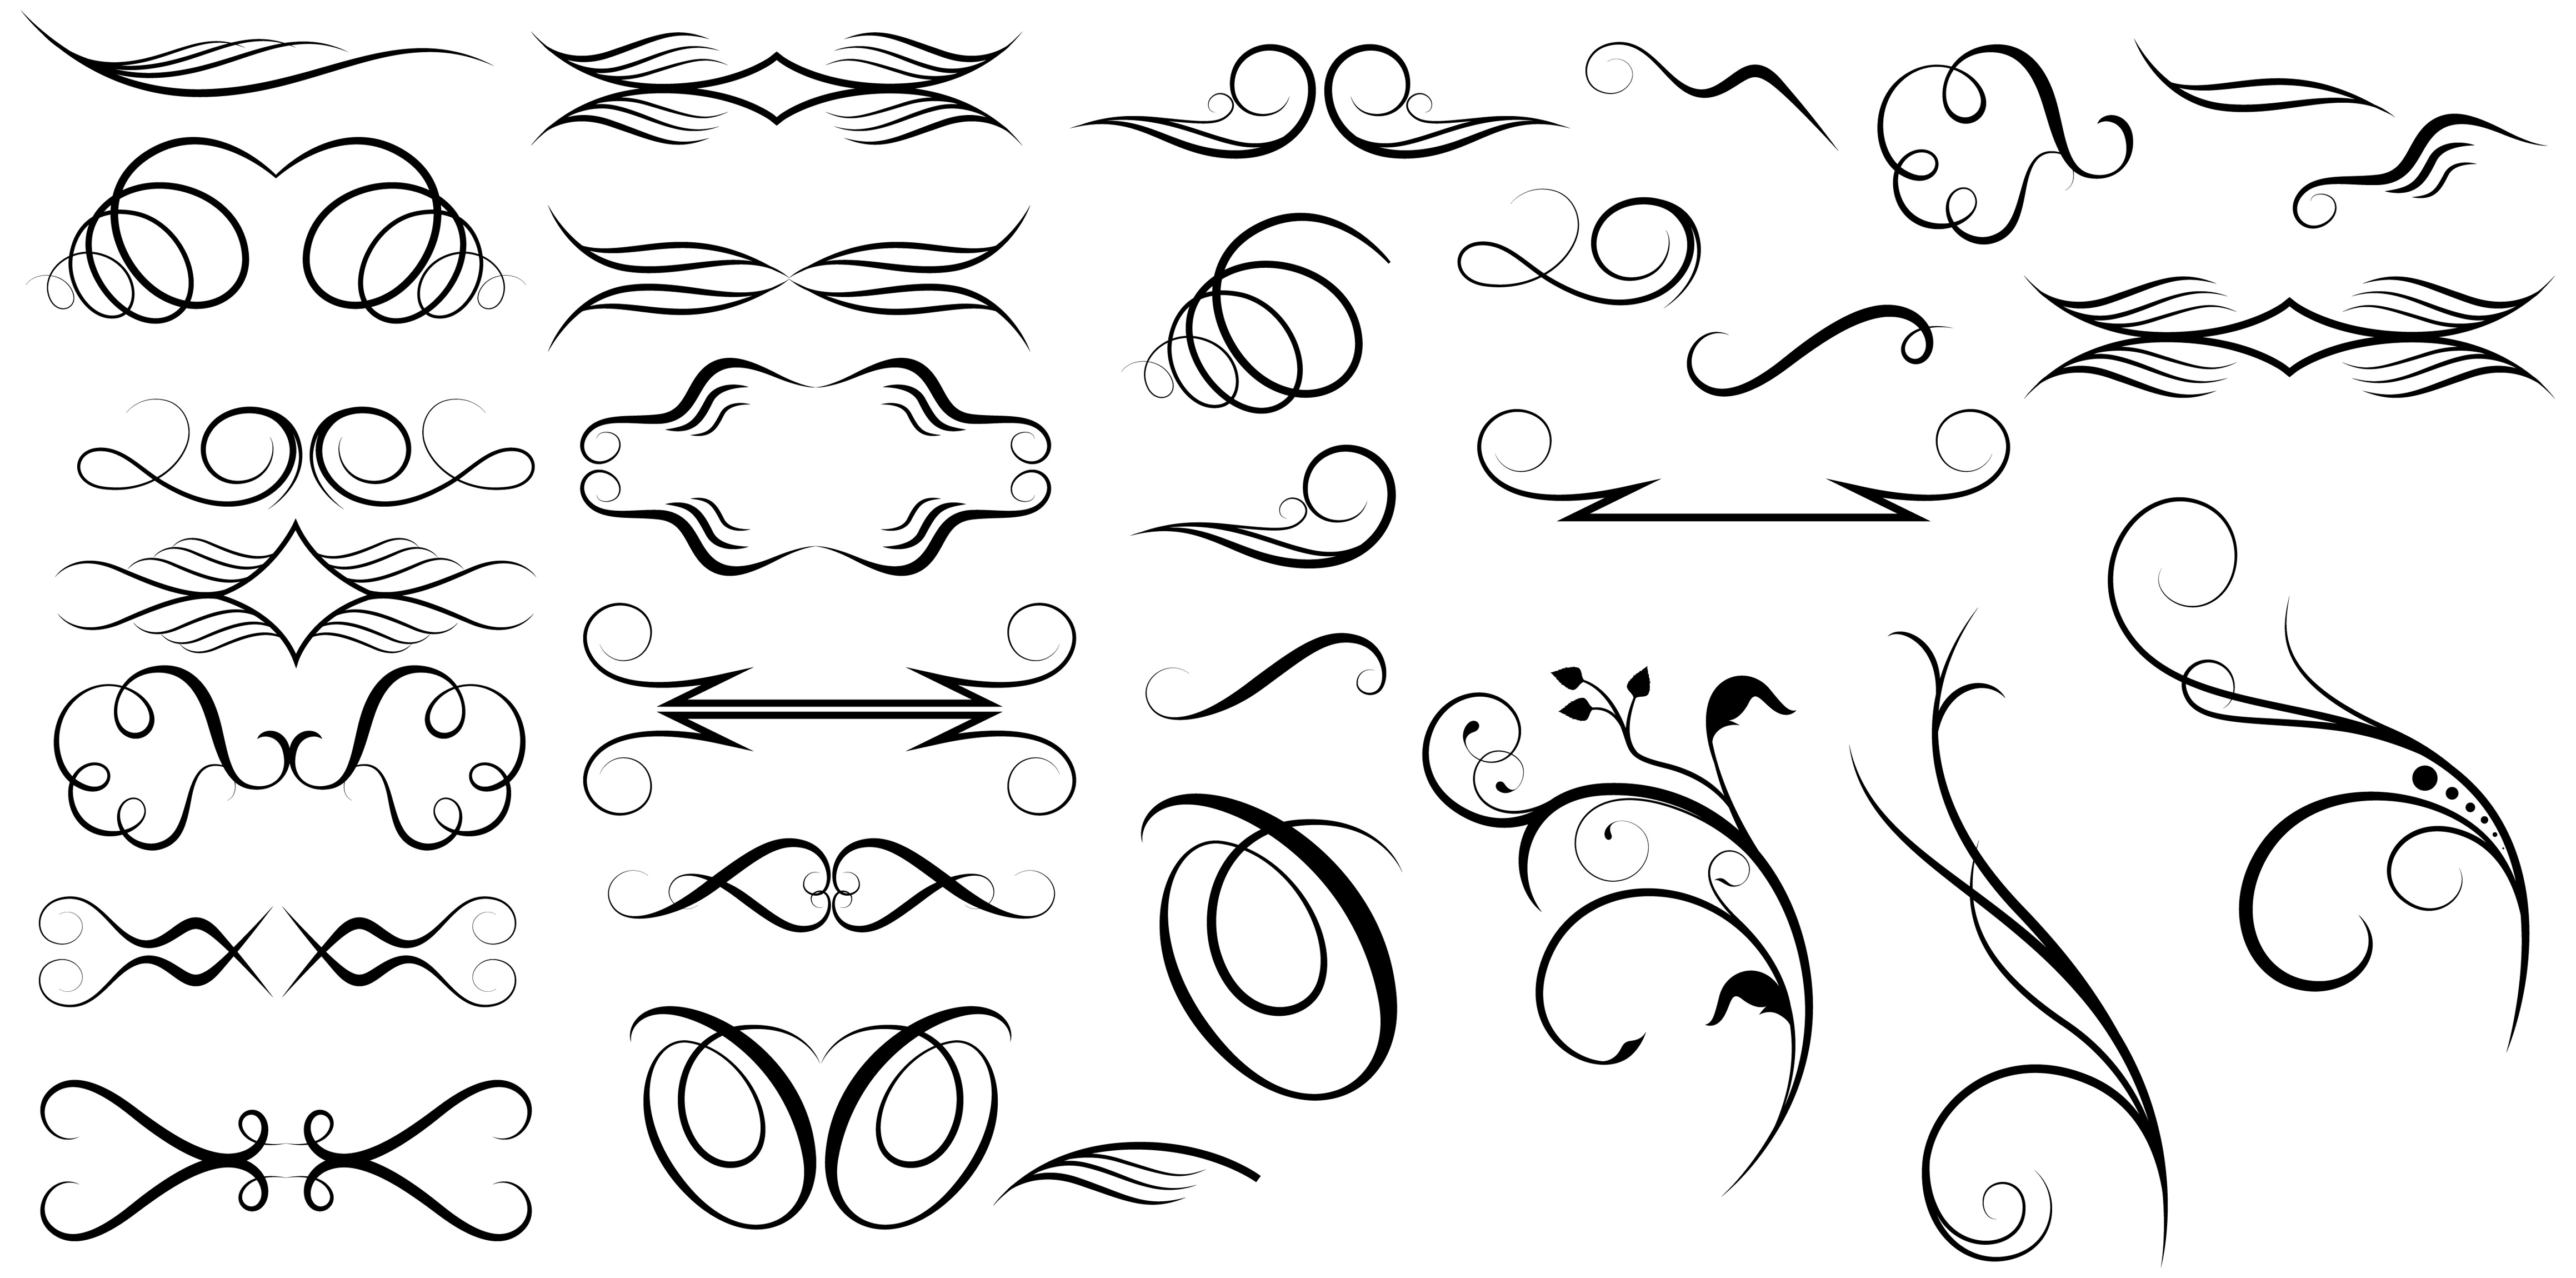 10 Simple Vector Swirls Images - Elegant Swirl Designs Vector, Free